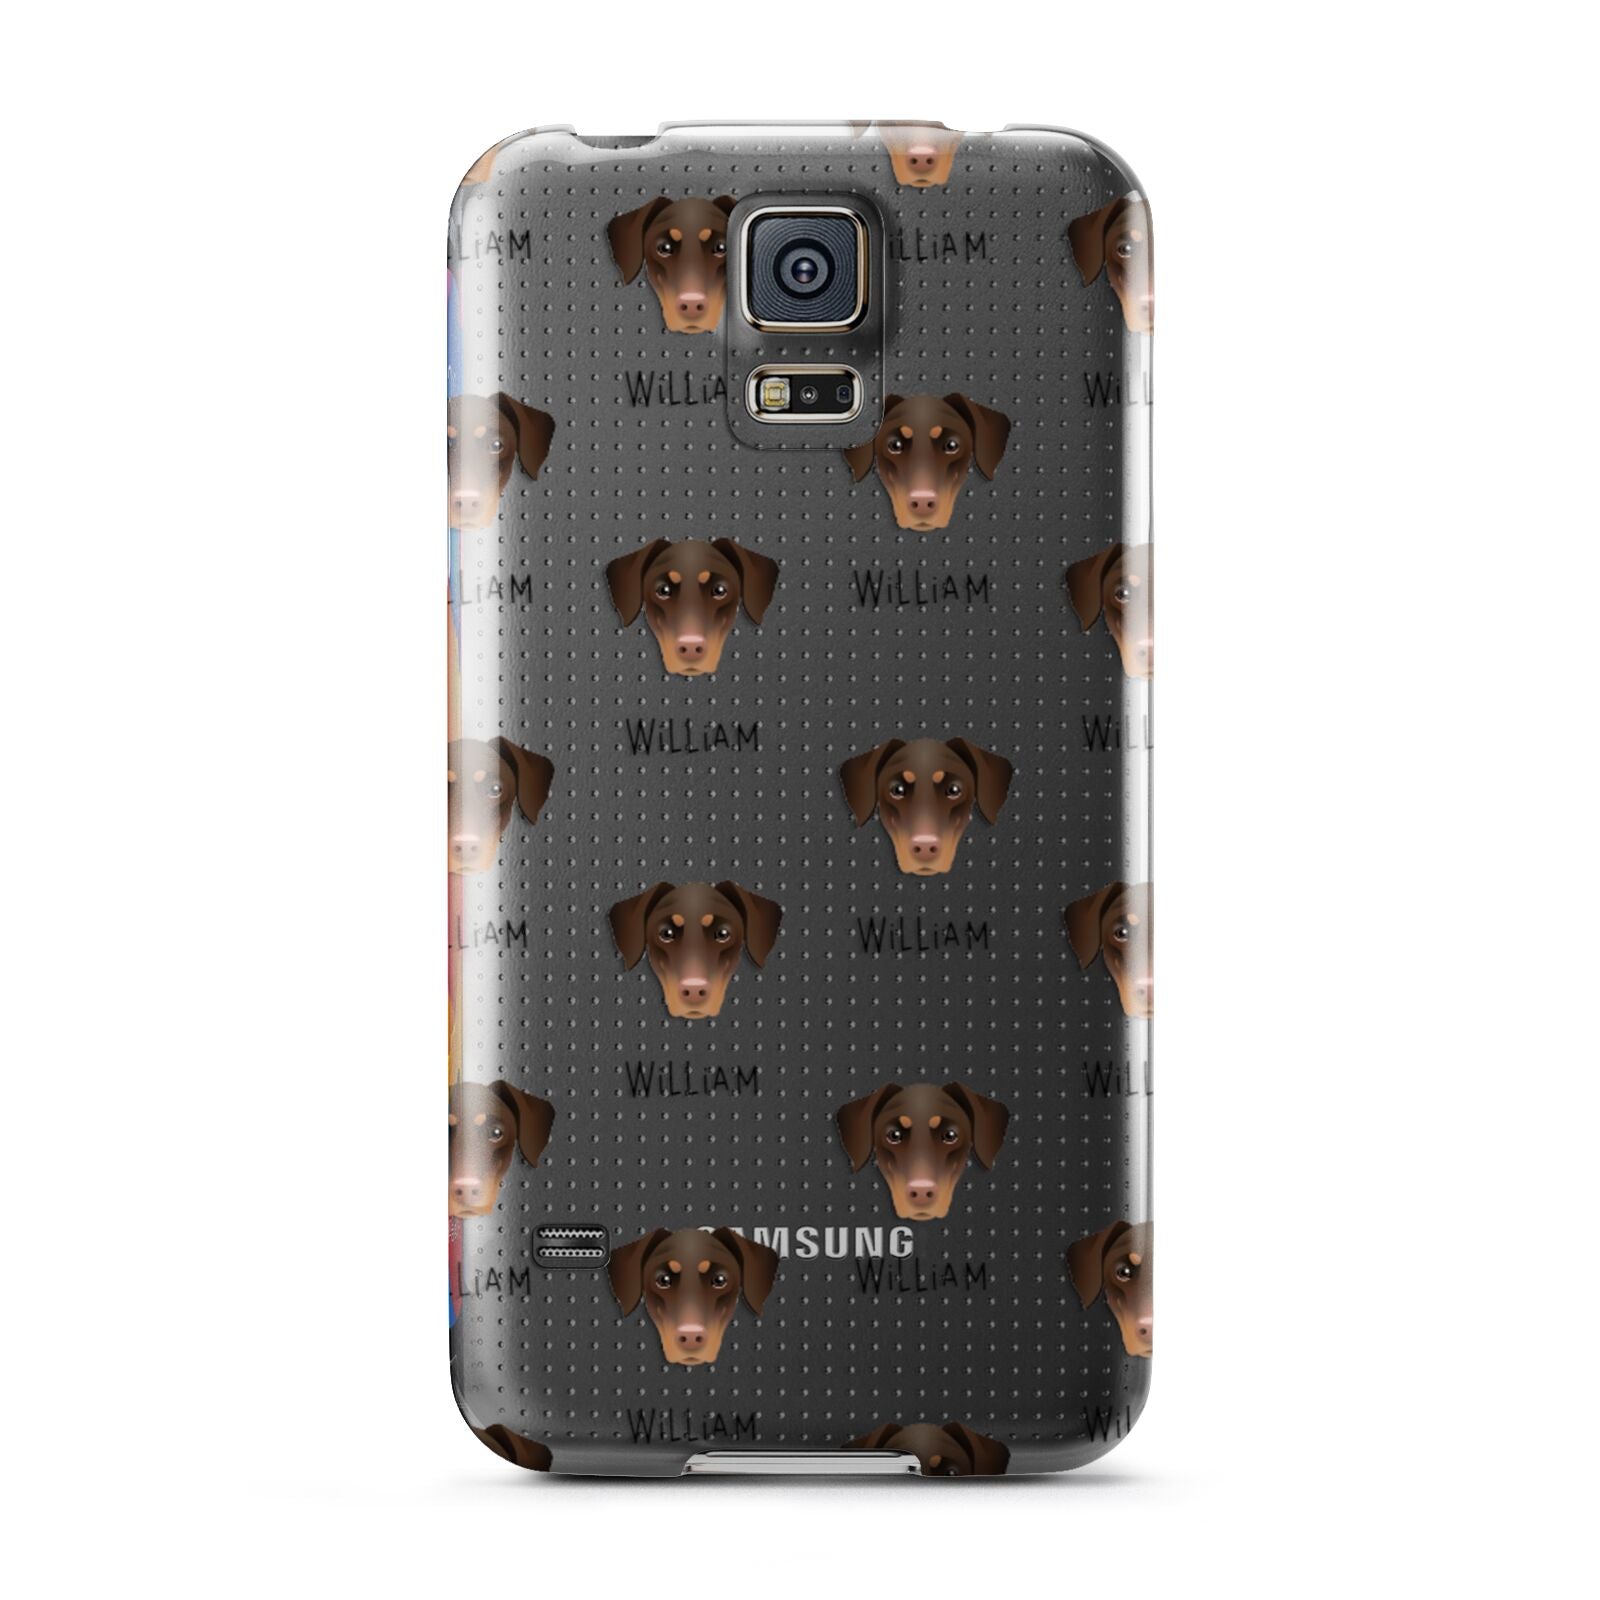 Dobermann Icon with Name Samsung Galaxy S5 Case